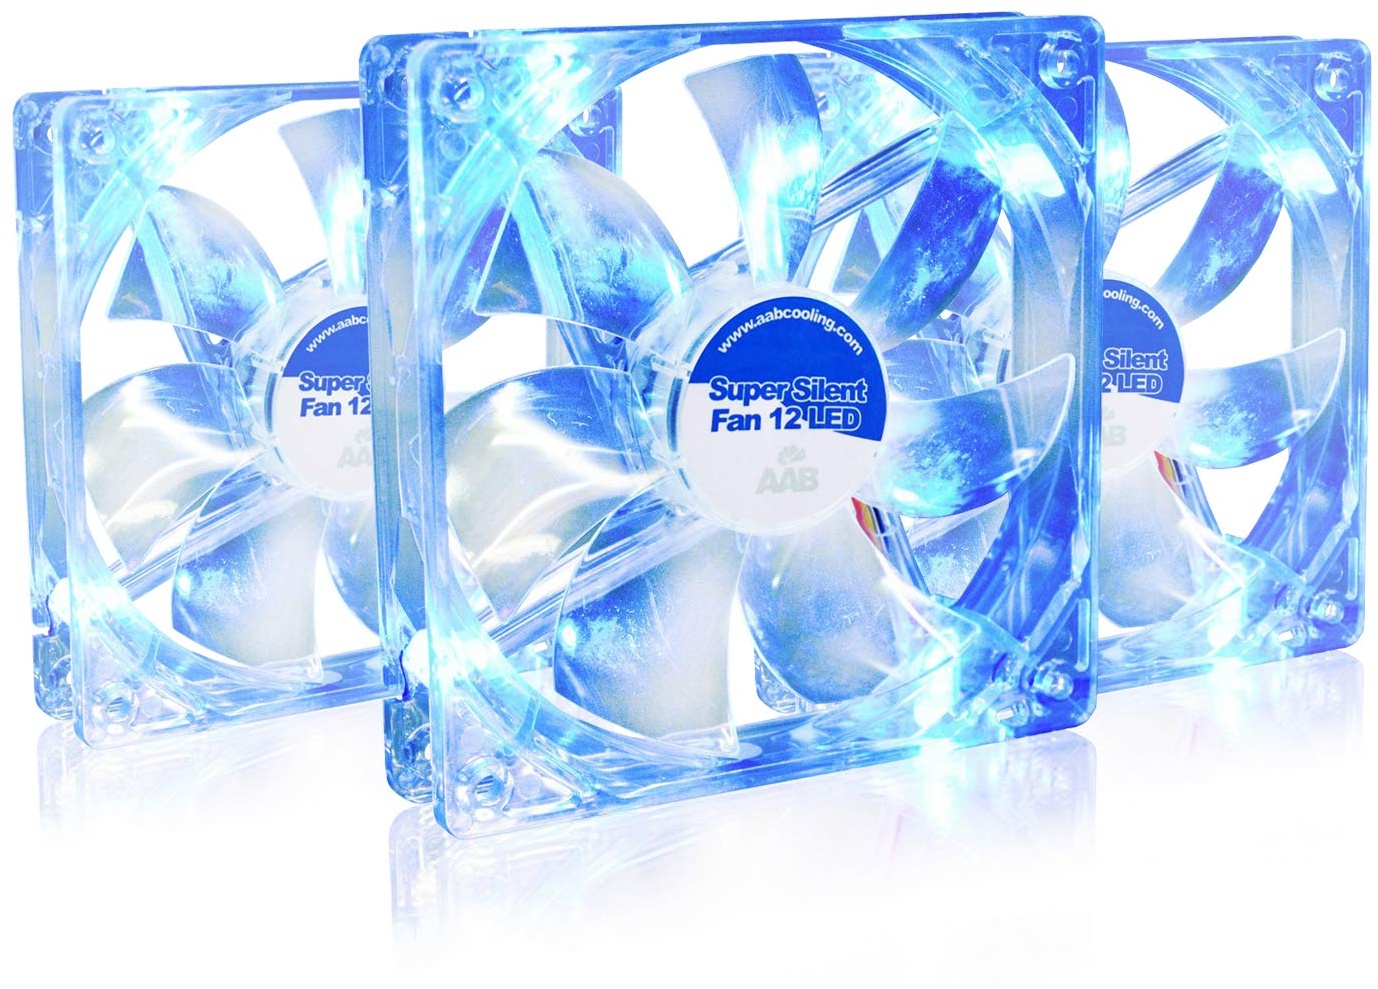 AABCOOLING Super Silent Fan 12 Blue LED - Leise Efizient 120mm Gehäuselüfter mit 4 Anti-Vibration-Pads und Blauer LED - Silent Lüfter, Kühler PC CPU Ventilator 13,6 dB 64,5 m3/ h - Wertpaket 3 Stück